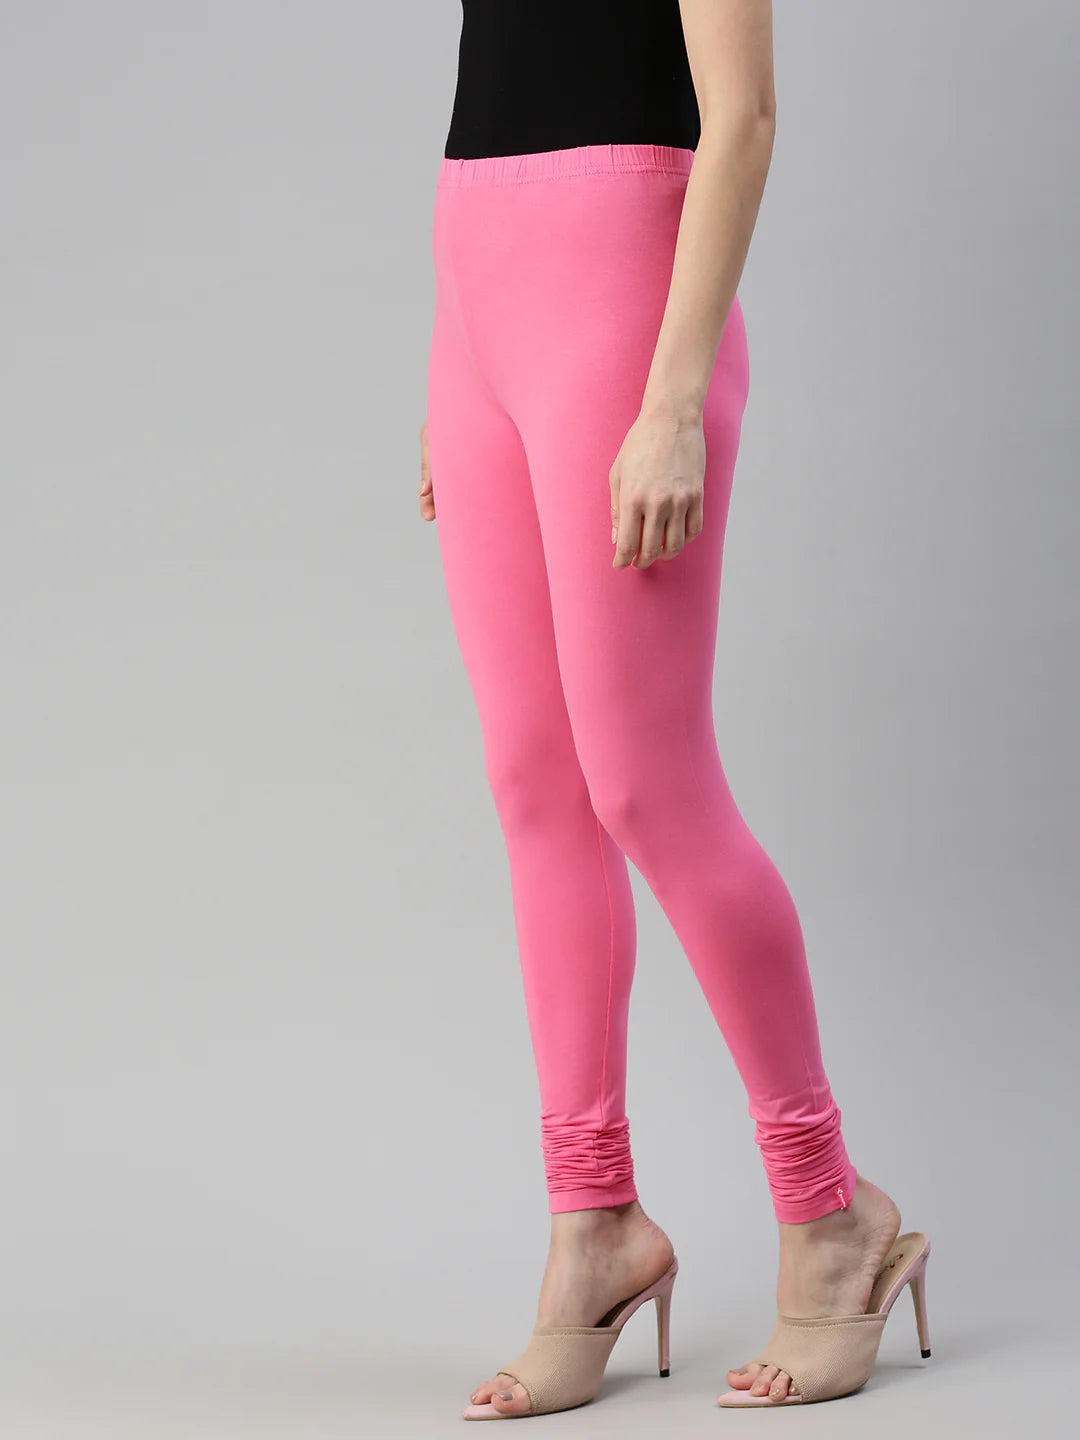 Buy Prisma Women's Viscose Legging 13_Cream_XXX-Large at Amazon.in